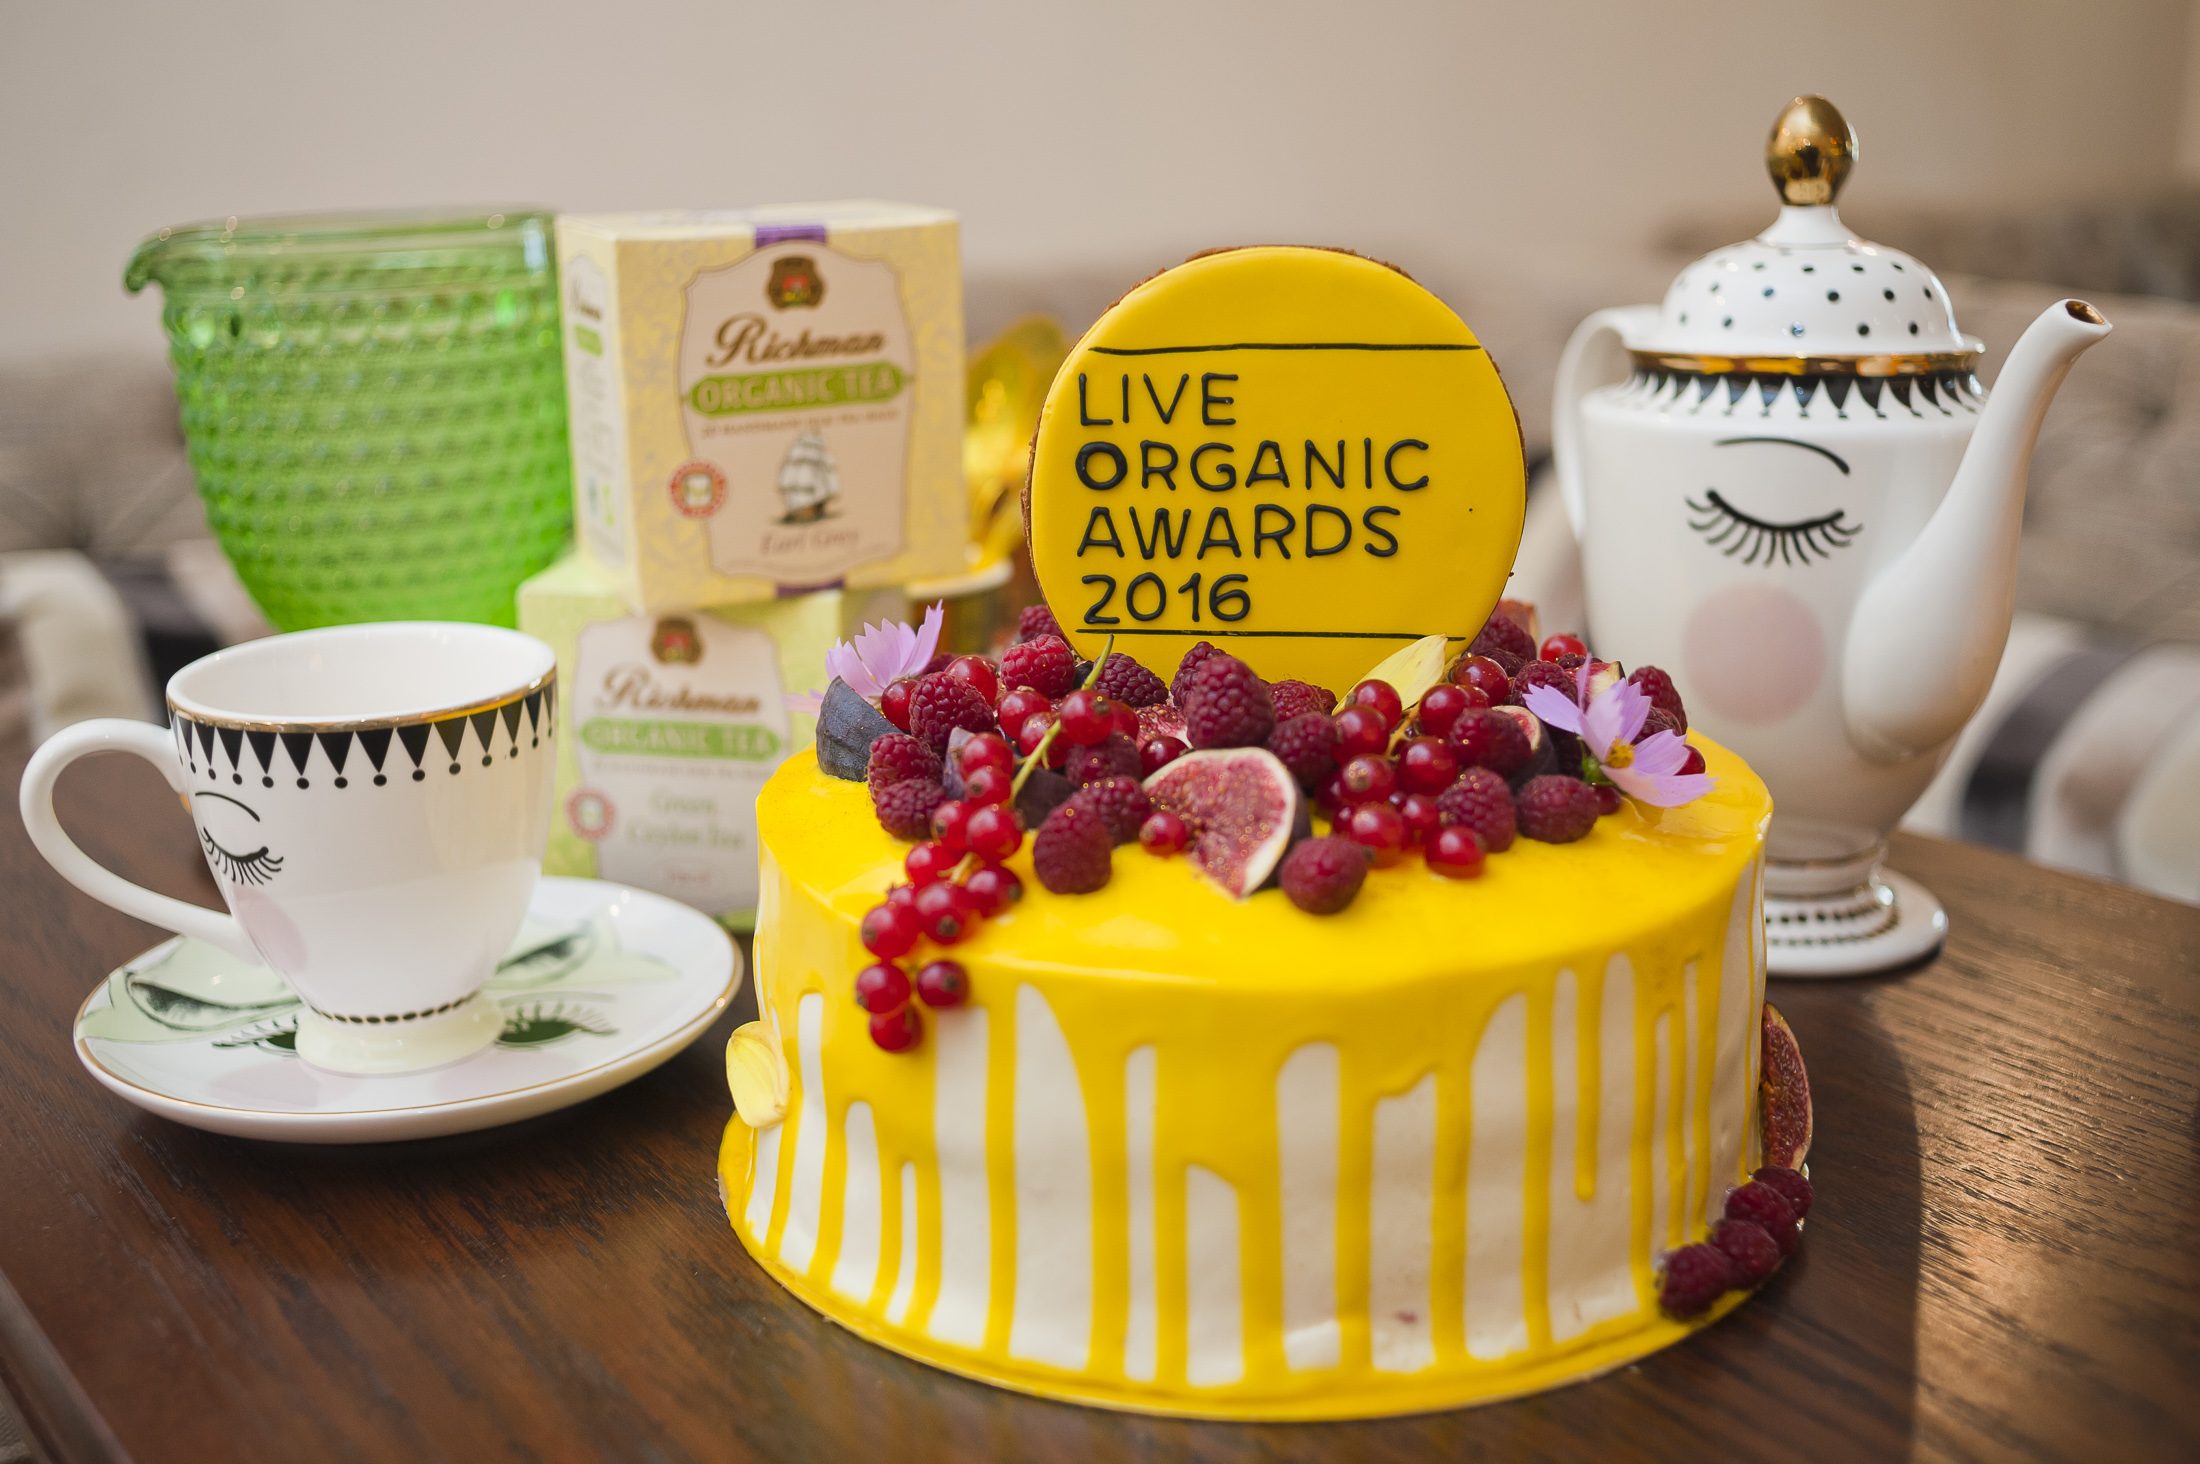  Live Organic Awards 2016